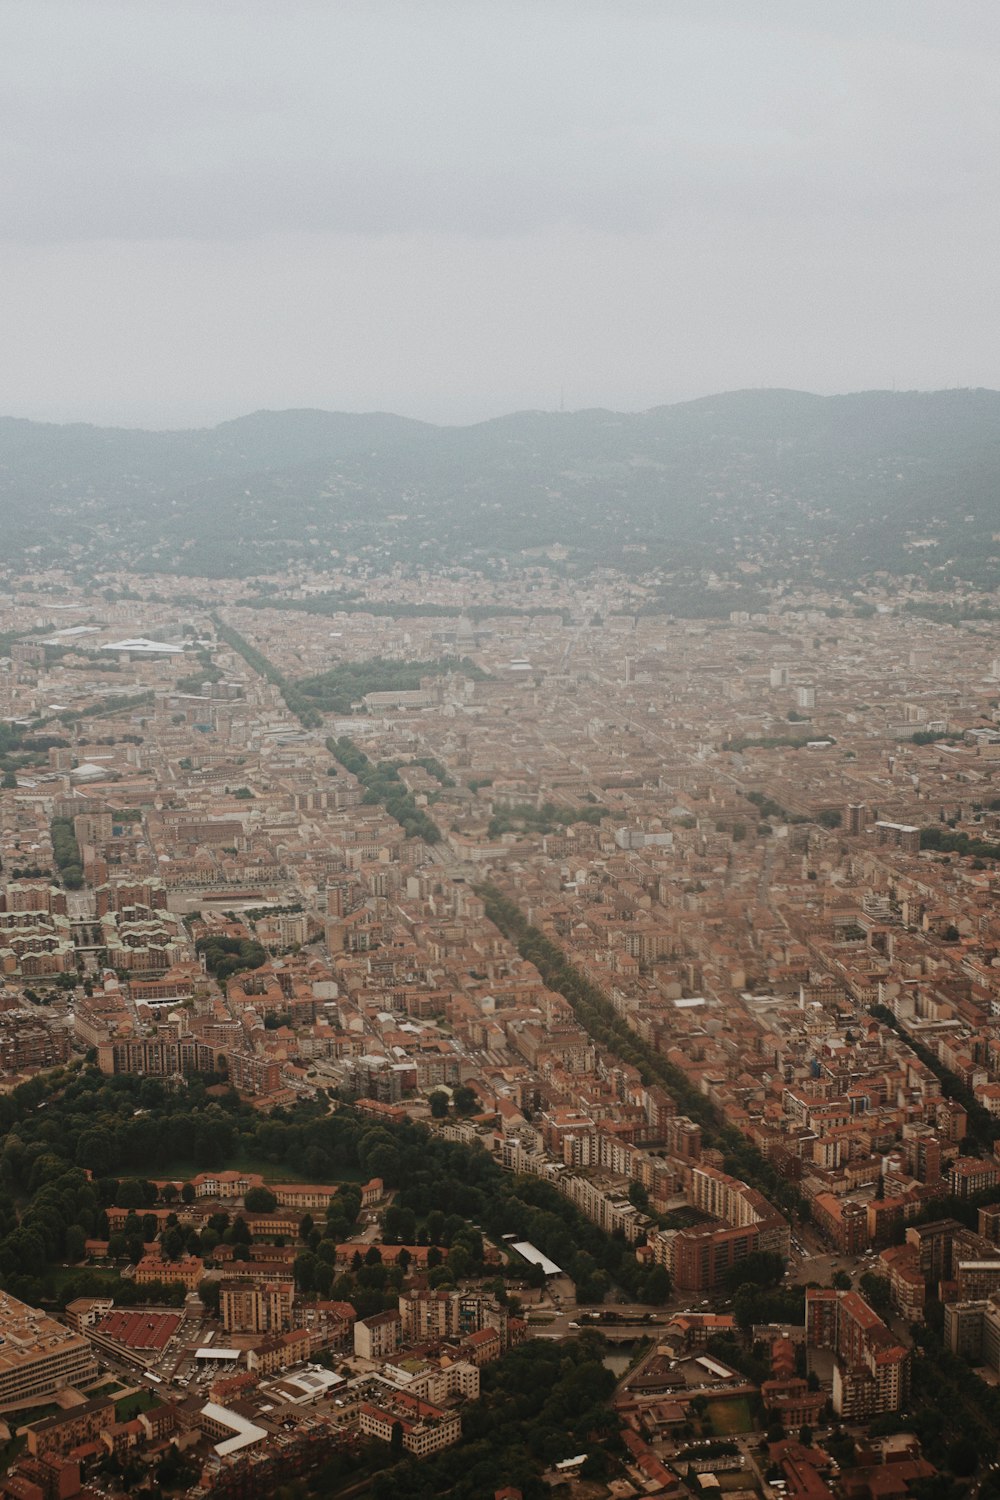 Una vista di una città da un aereo